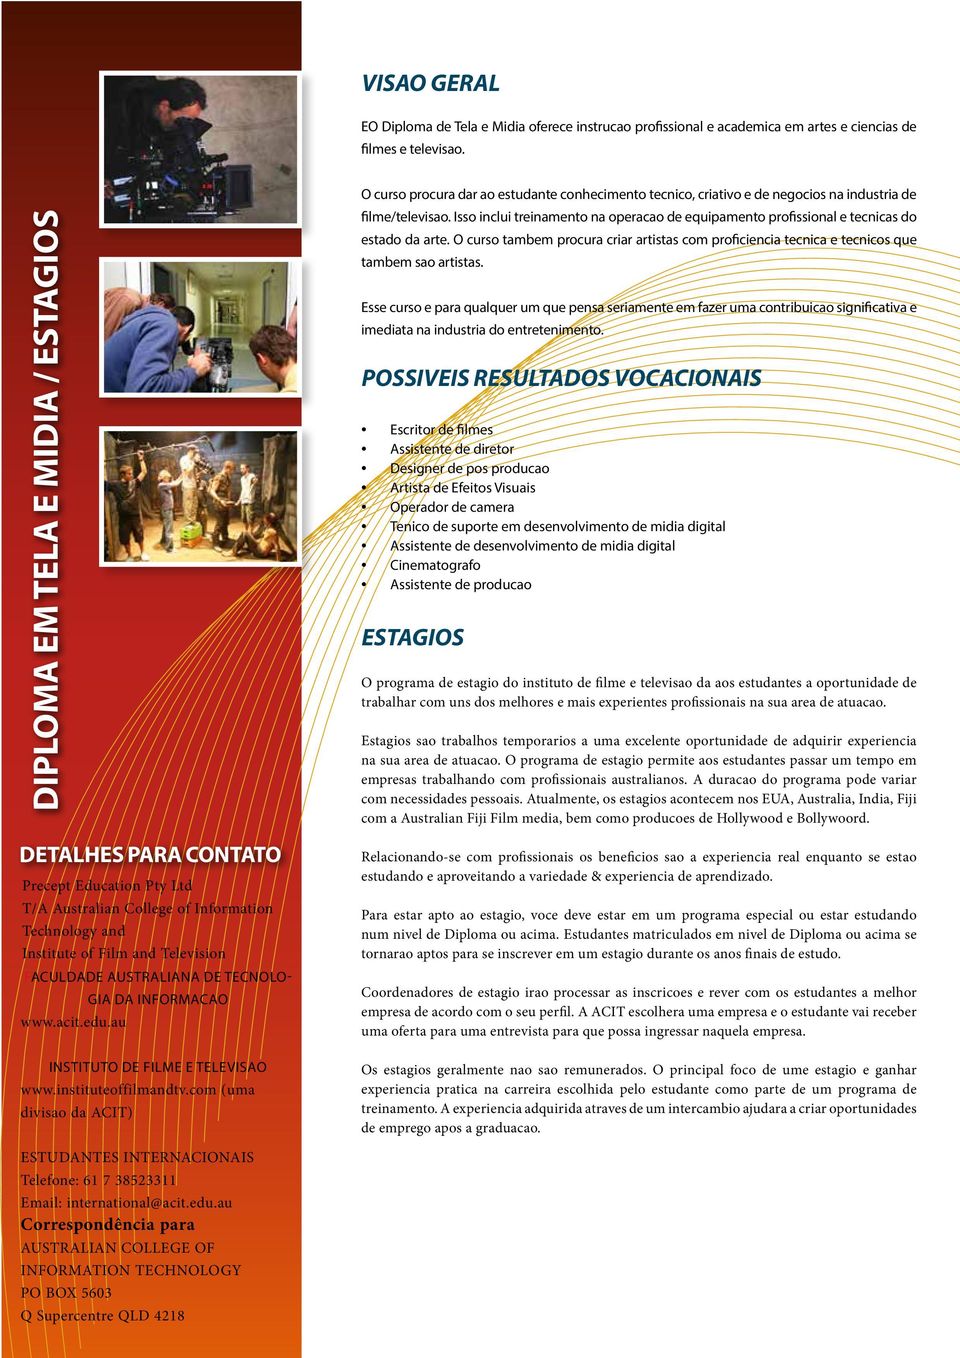 Tecnologia da Informacao www.acit.edu.au Instituto de Filme e Televisao www.instituteoffilmandtv.